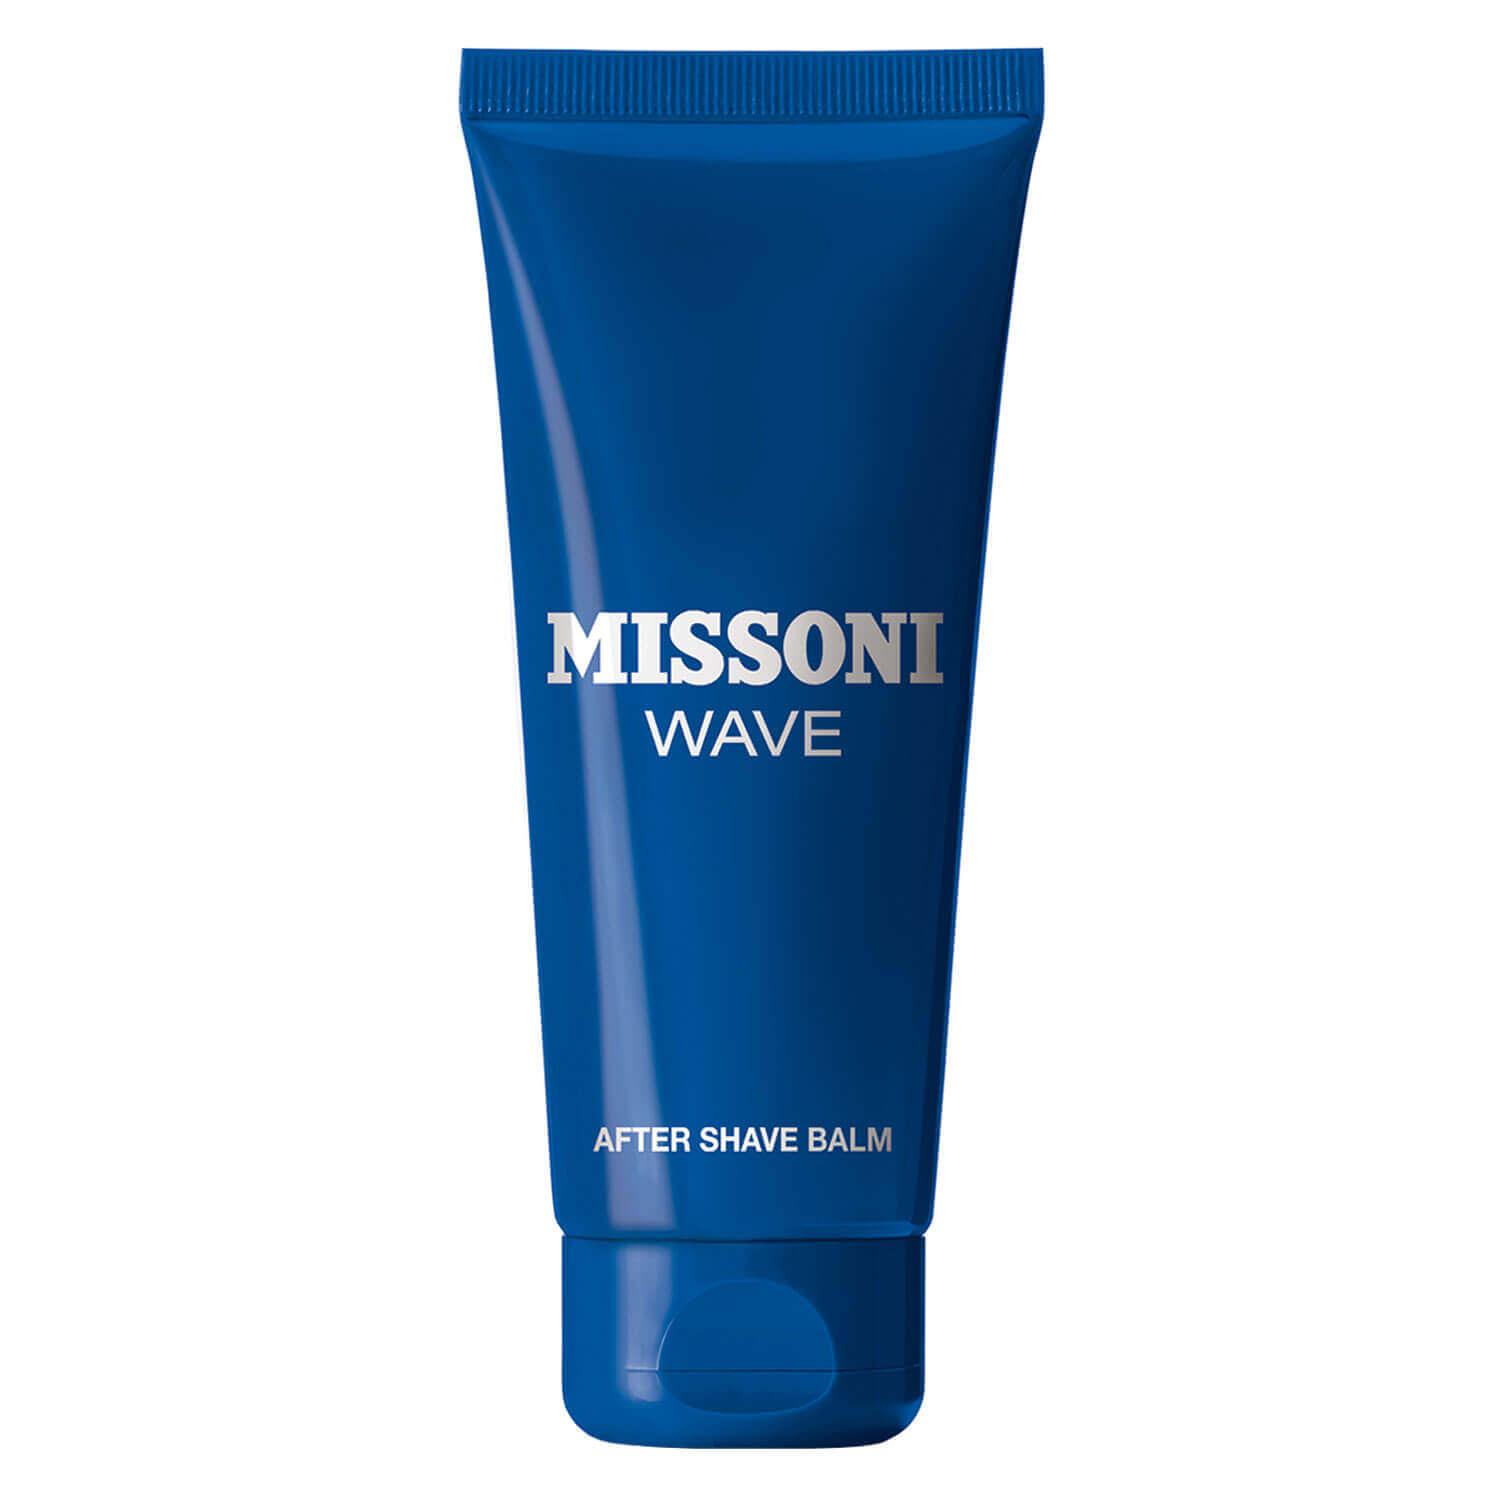 Missoni Wave - After Shave Balm